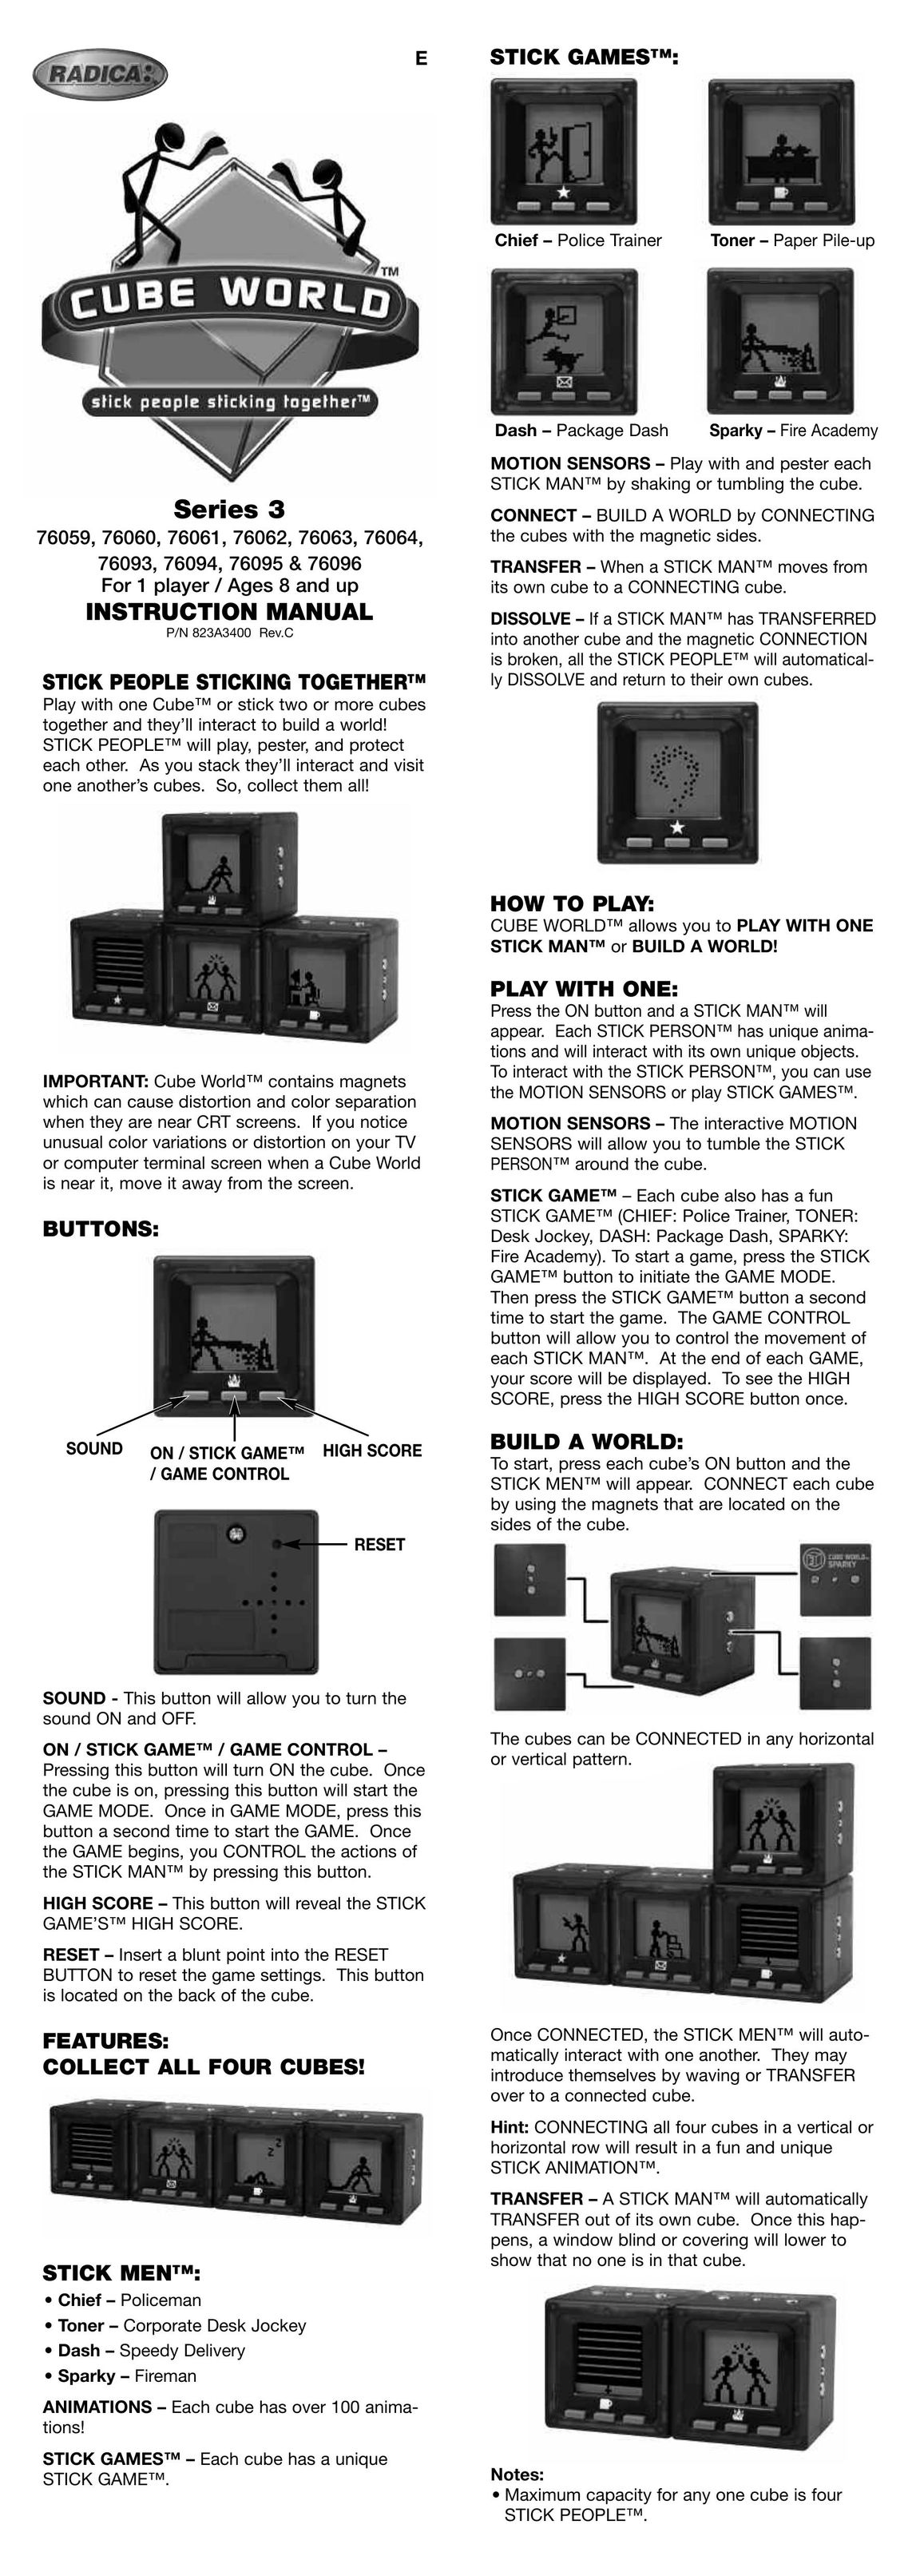 Radica Games 76060 Handheld Game System User Manual